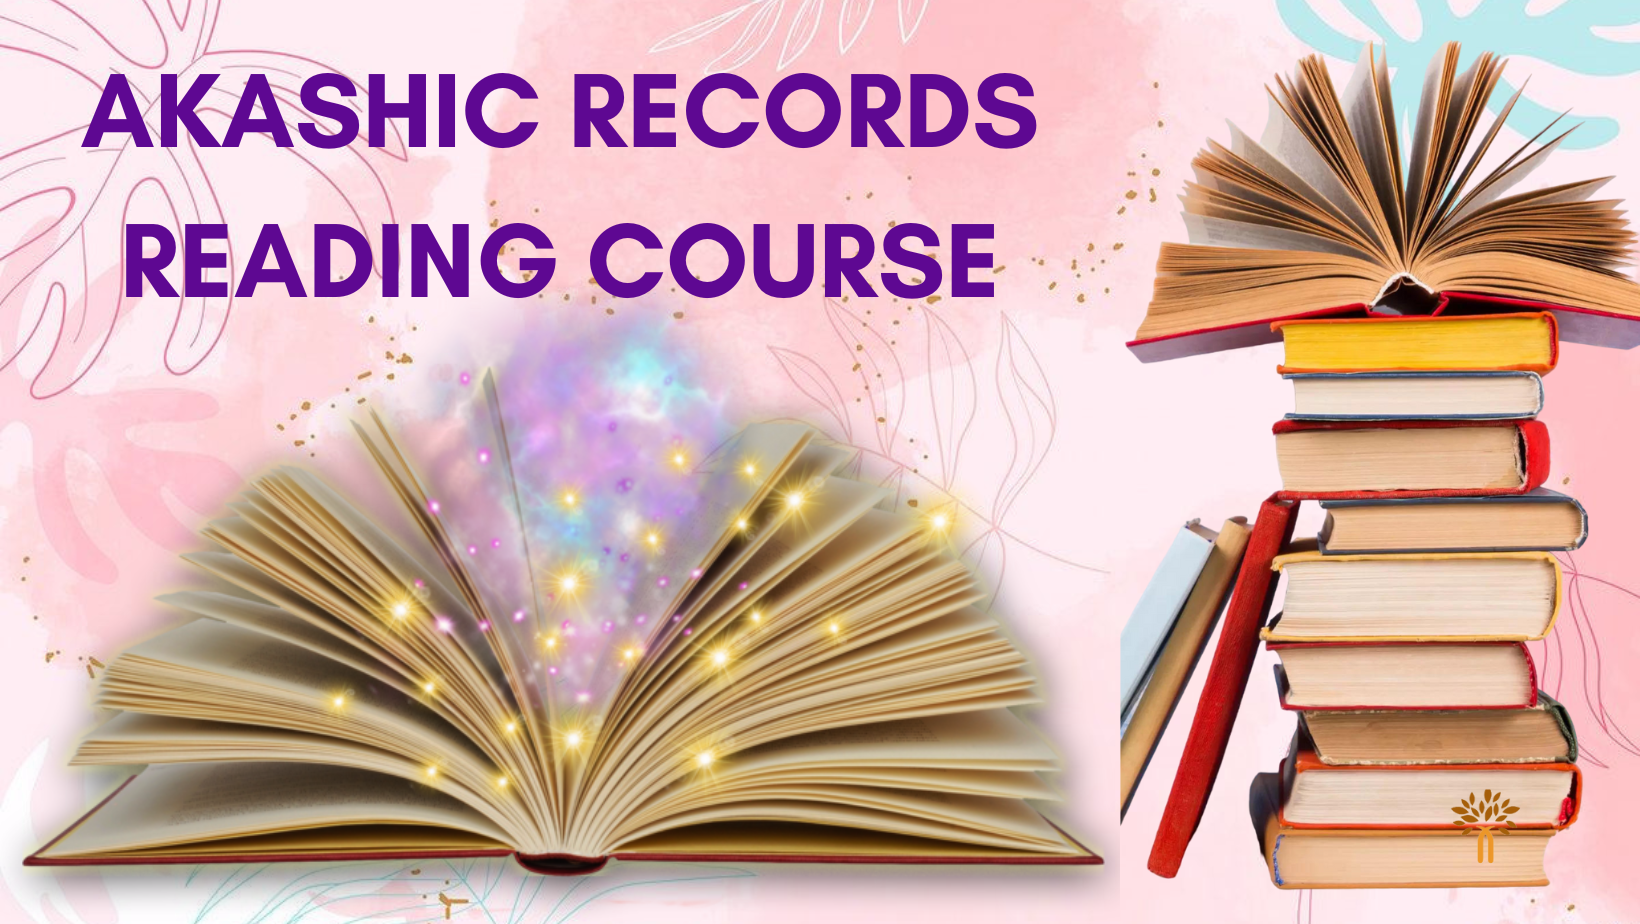 Akashic Records Reading Course in Mumbai